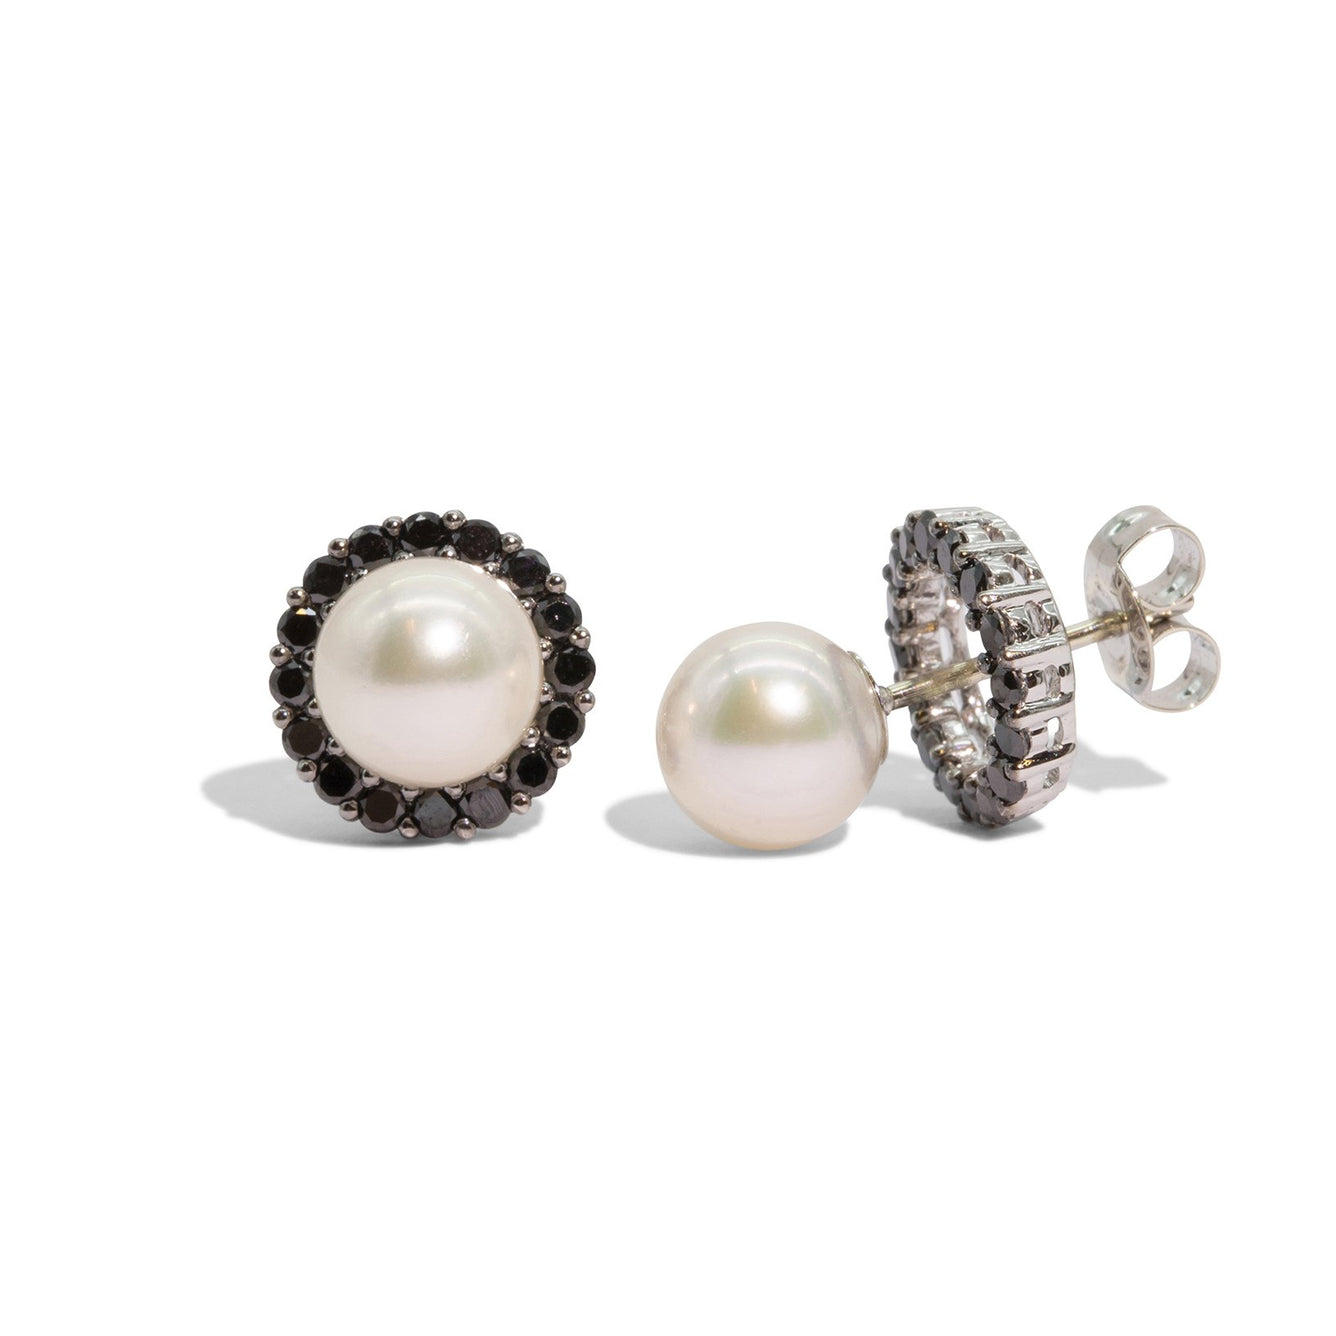 Black diamond Earrings and Pearl